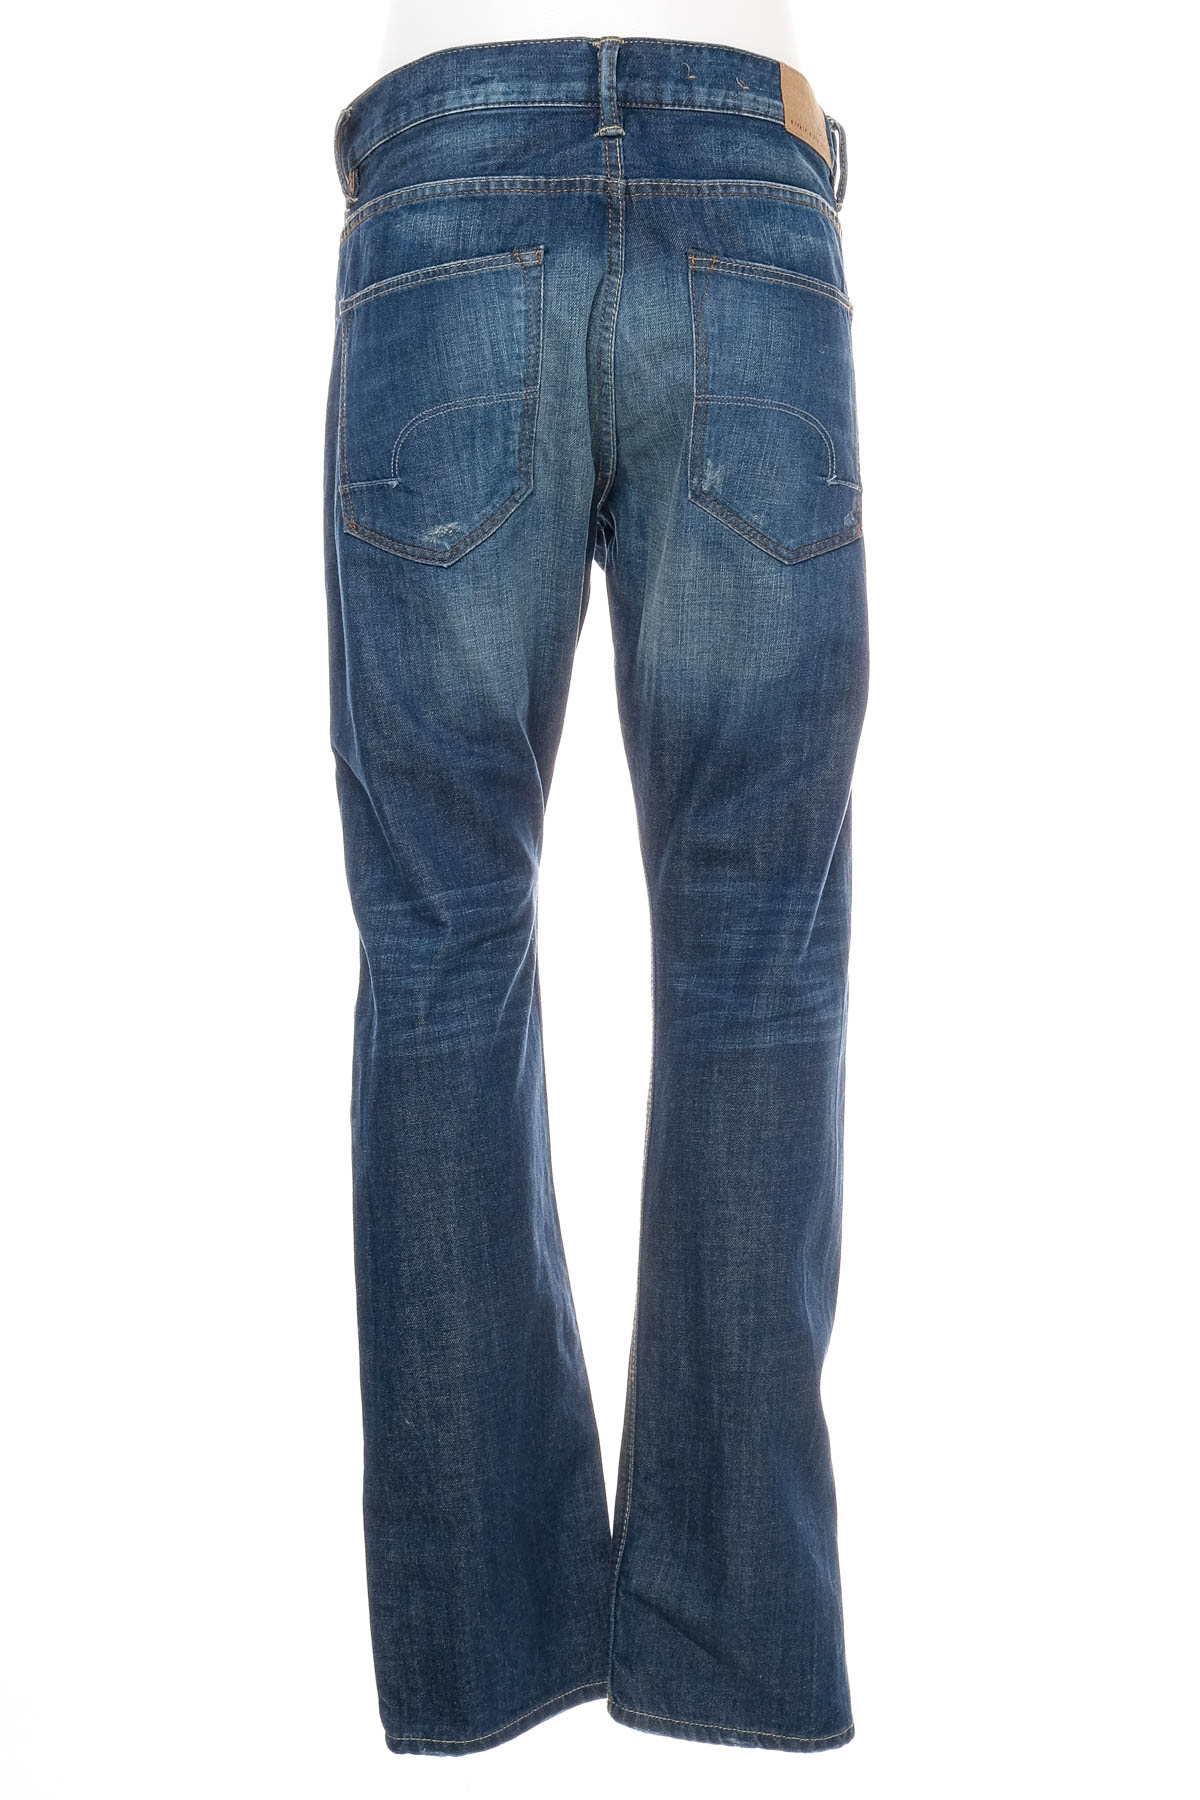 Men's jeans - Edc - 1